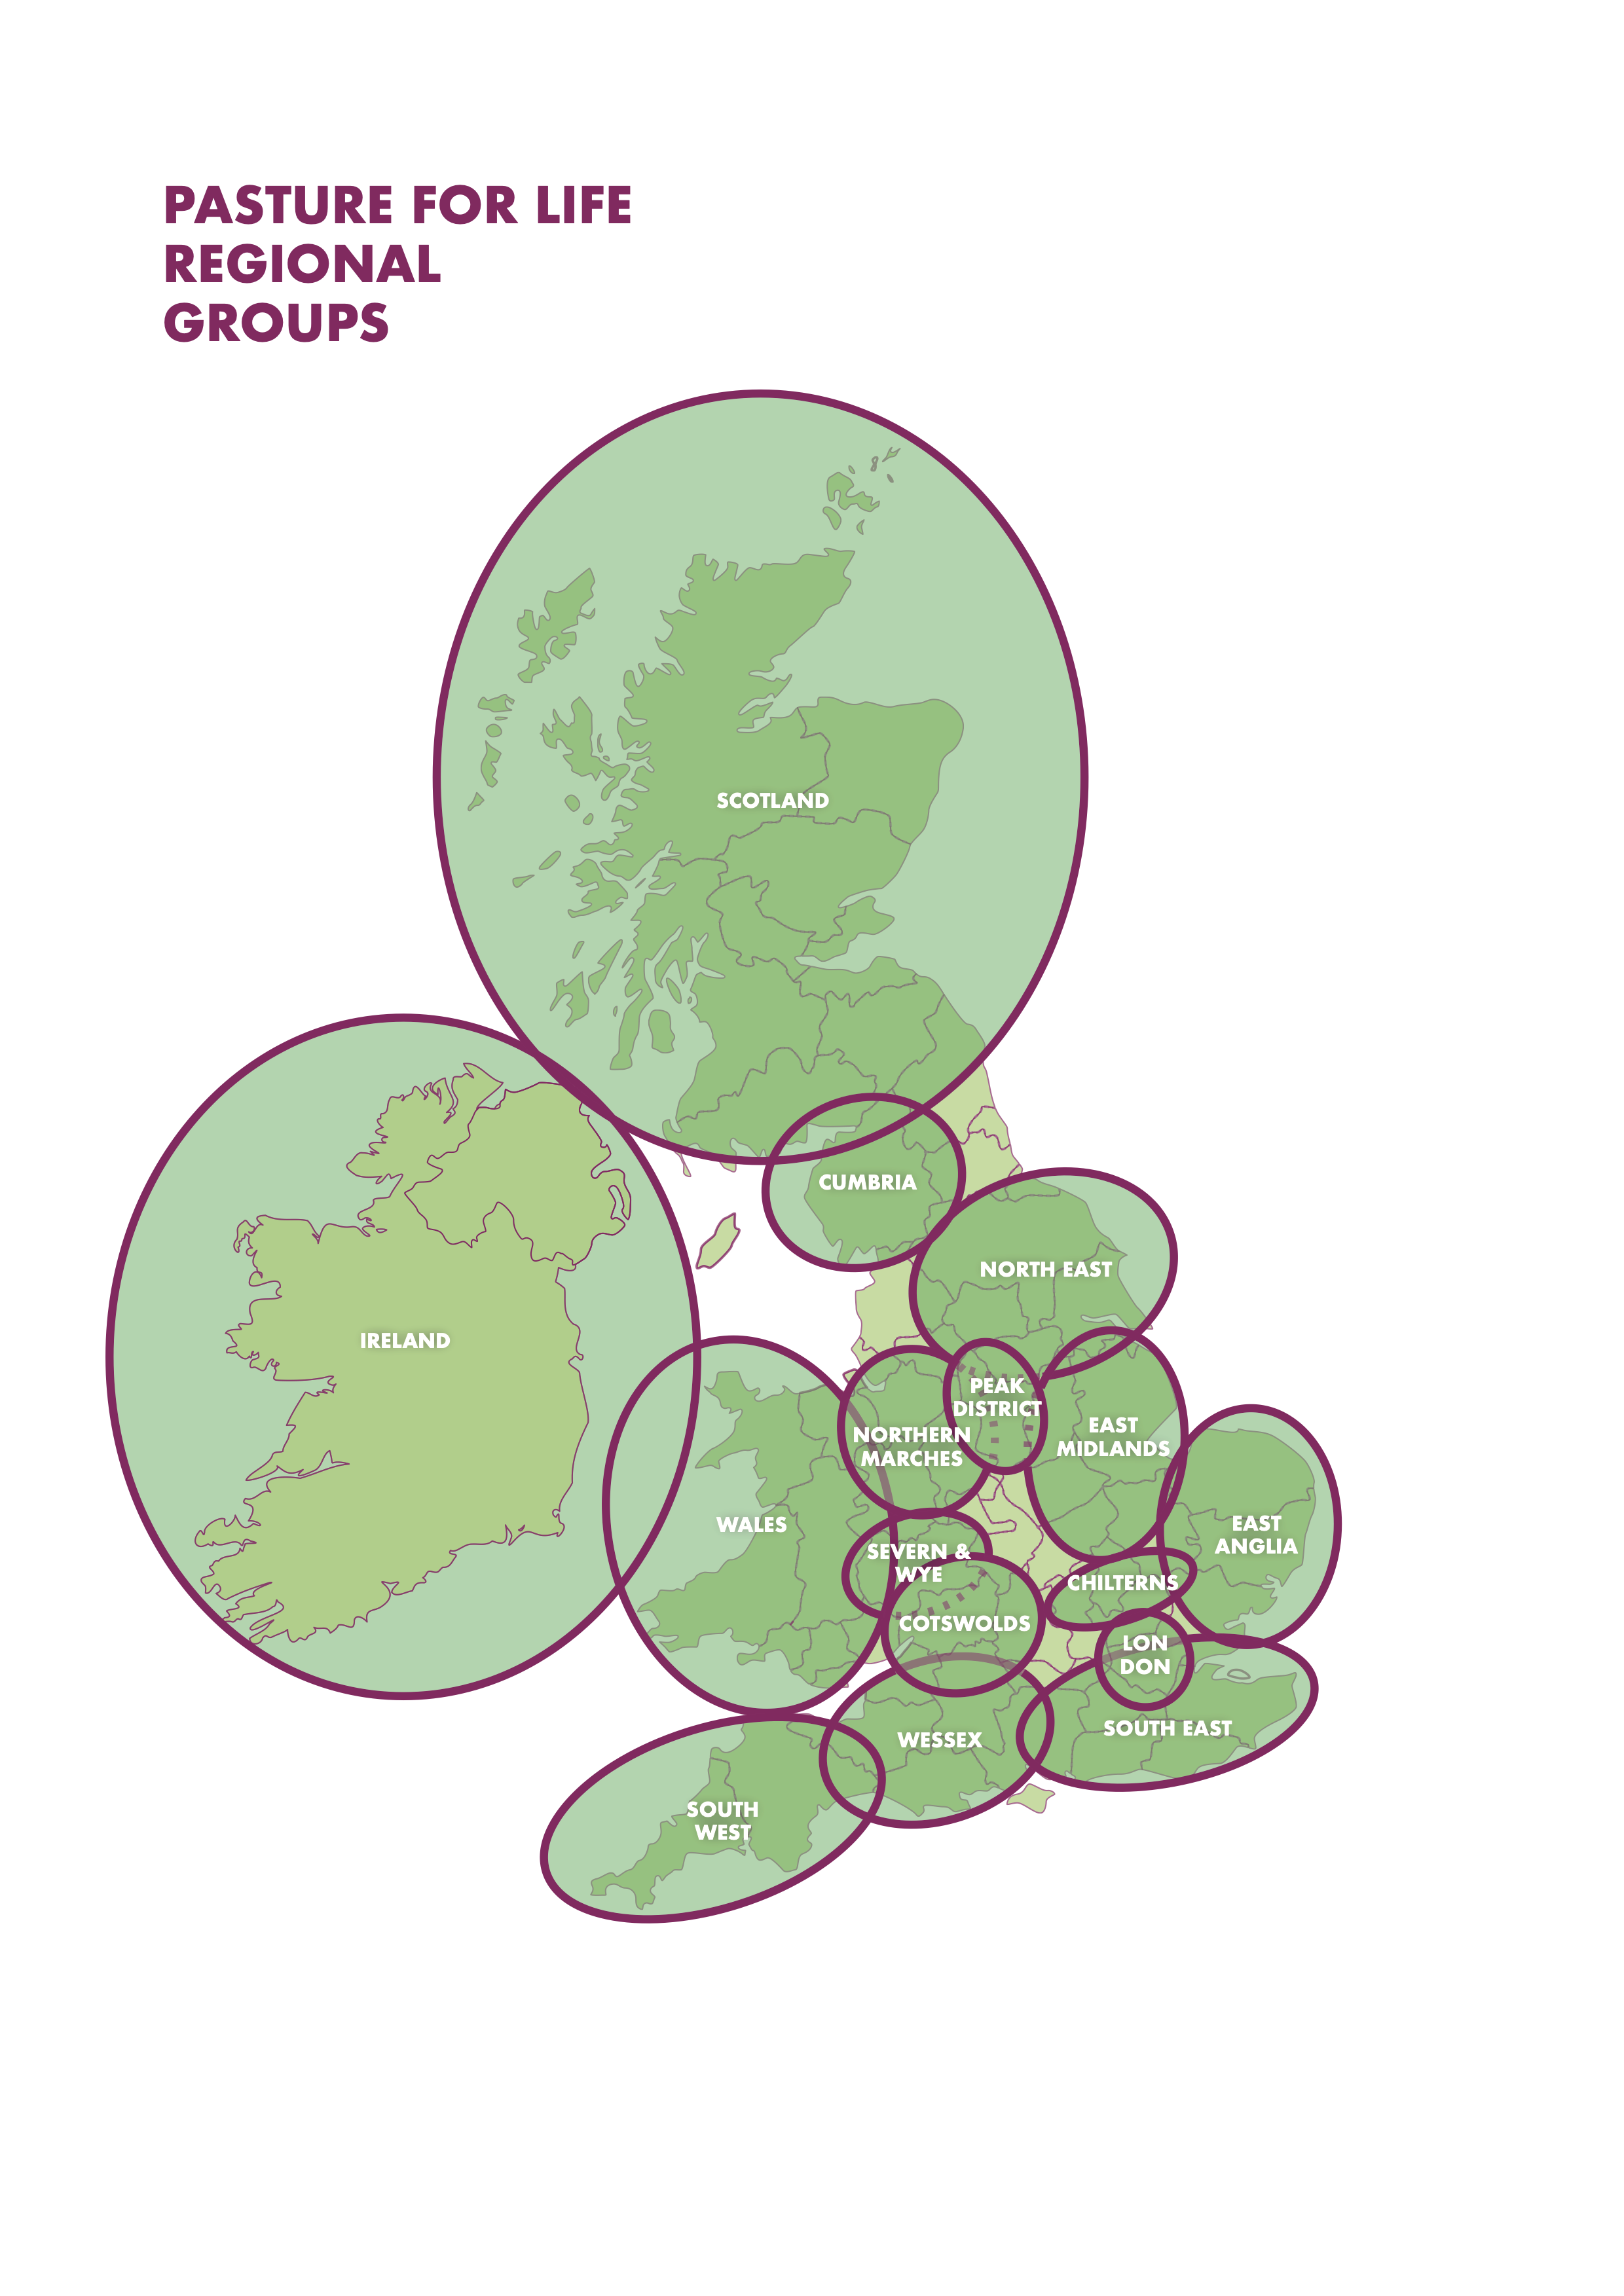 Regional groups across the UK and Ireland